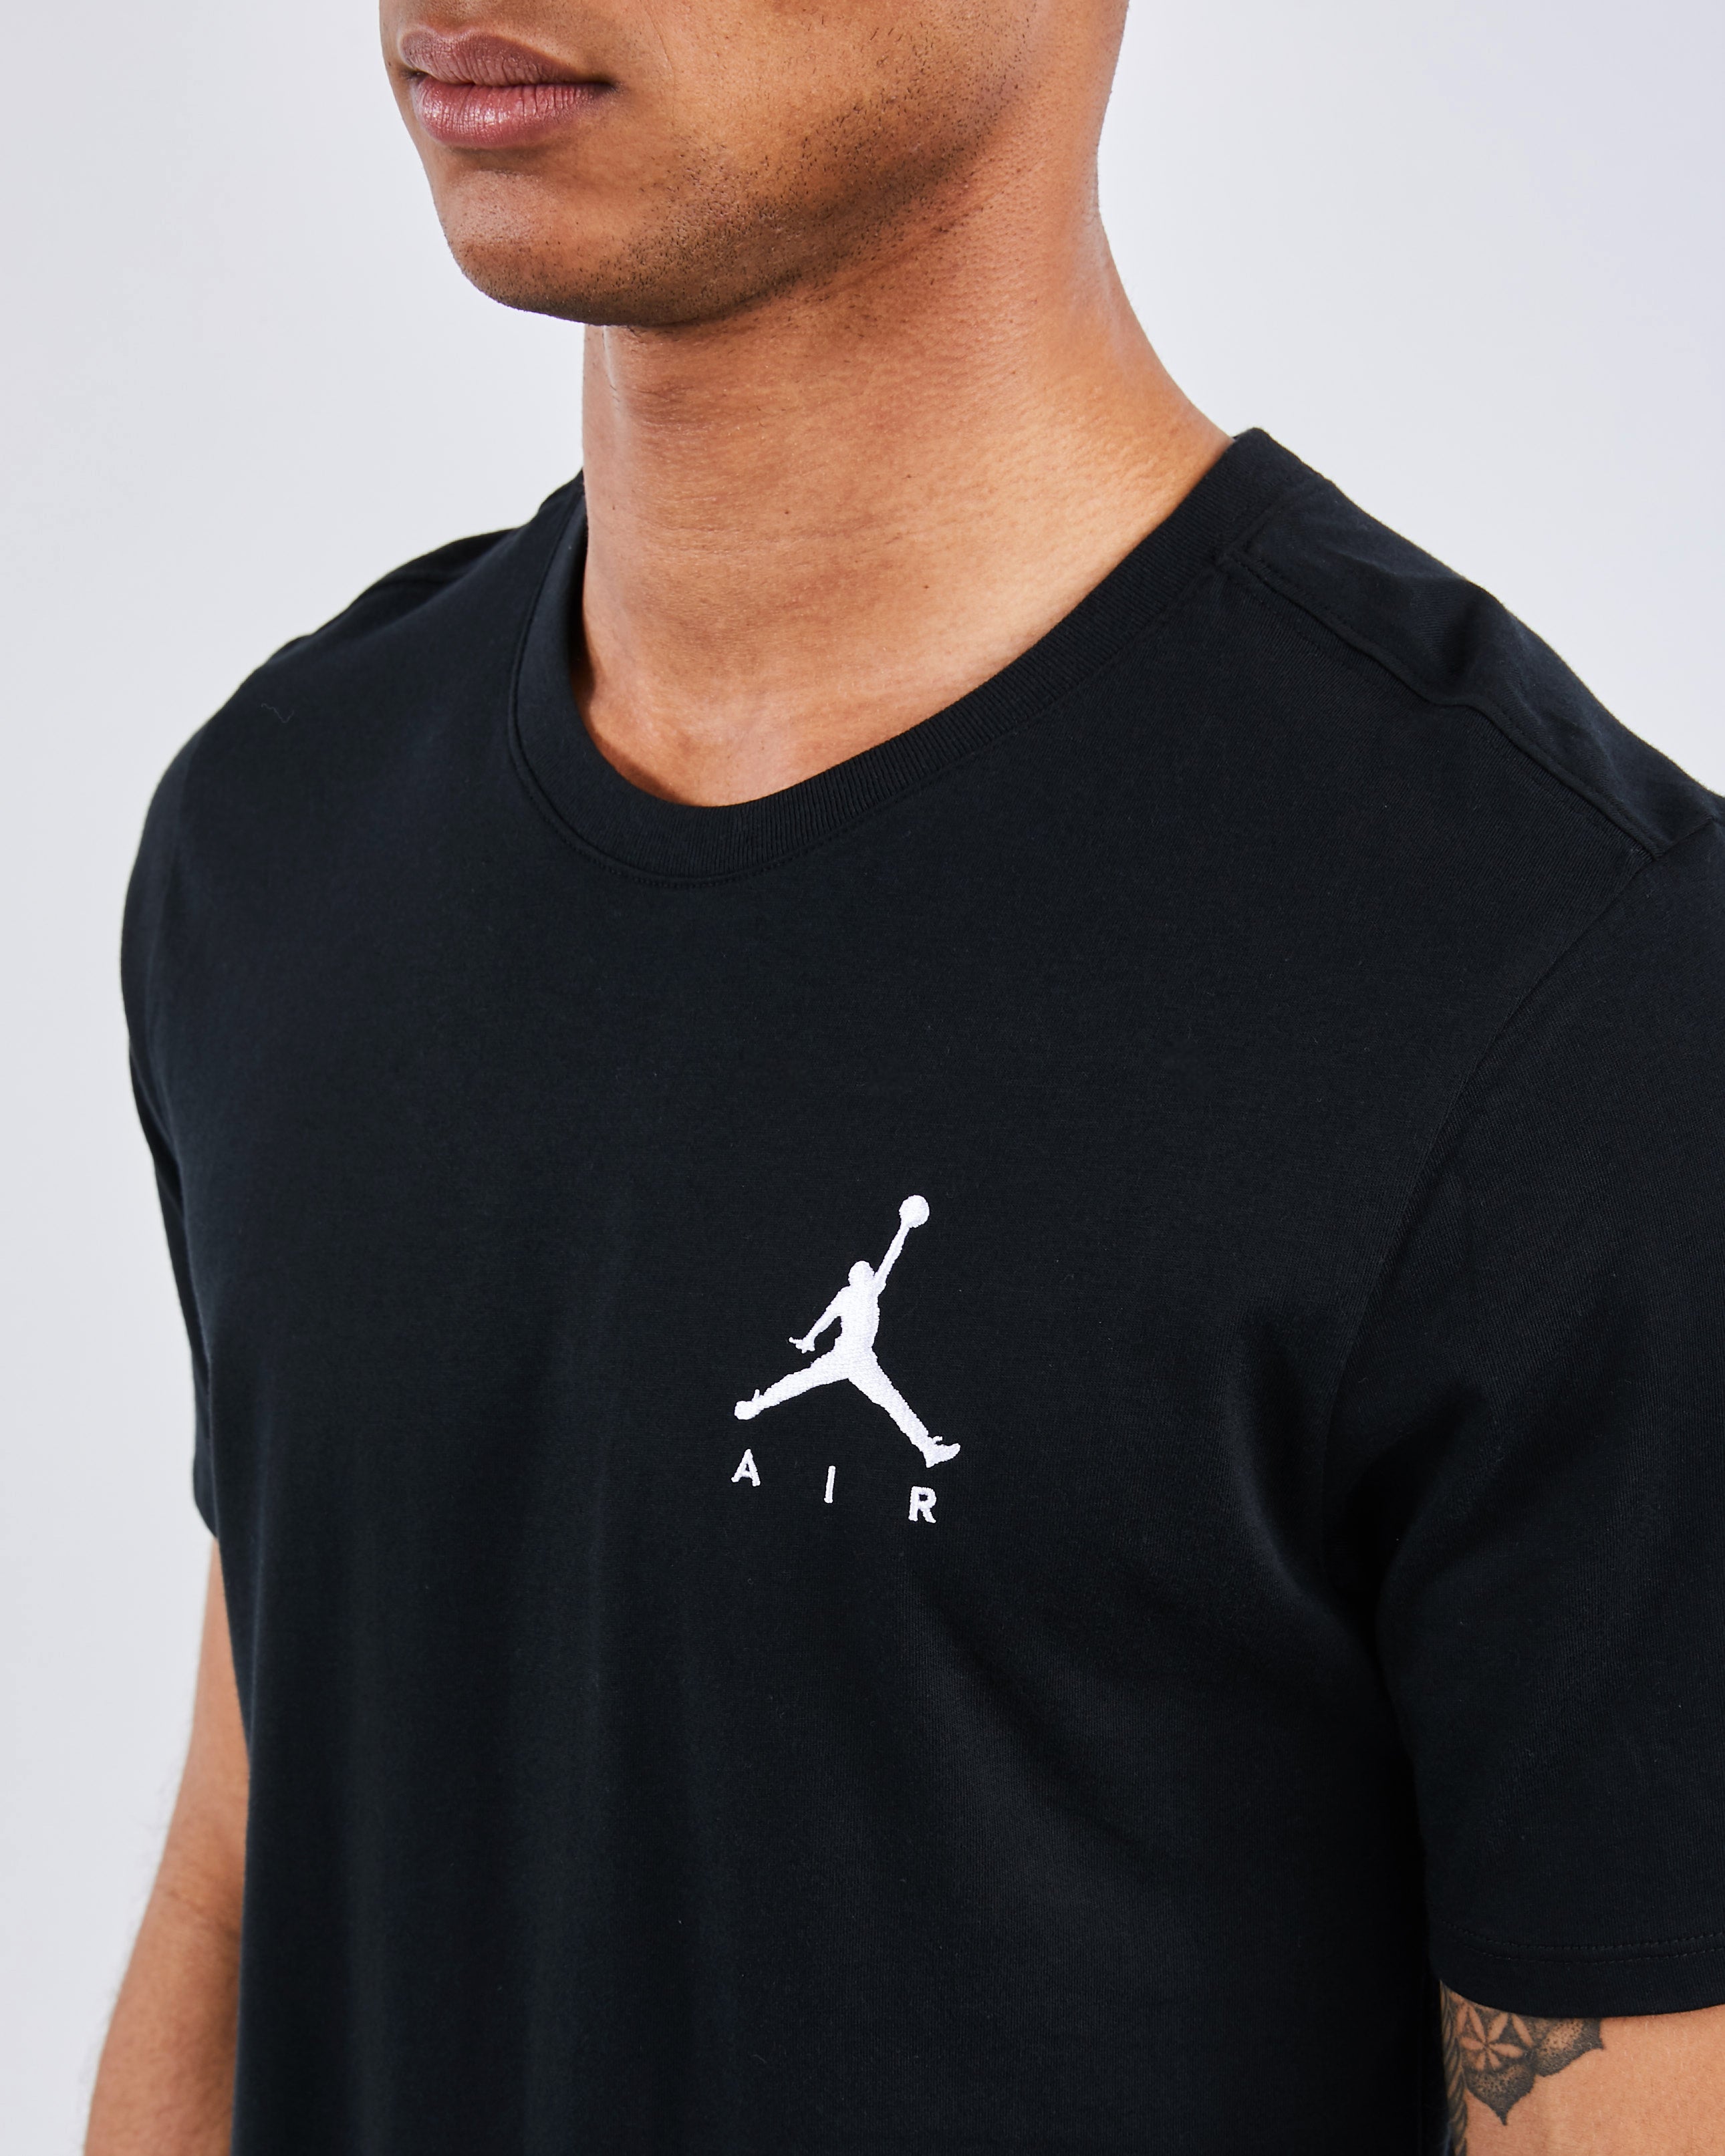 Jordan Jumpman Air Embroidered @ Footlocker